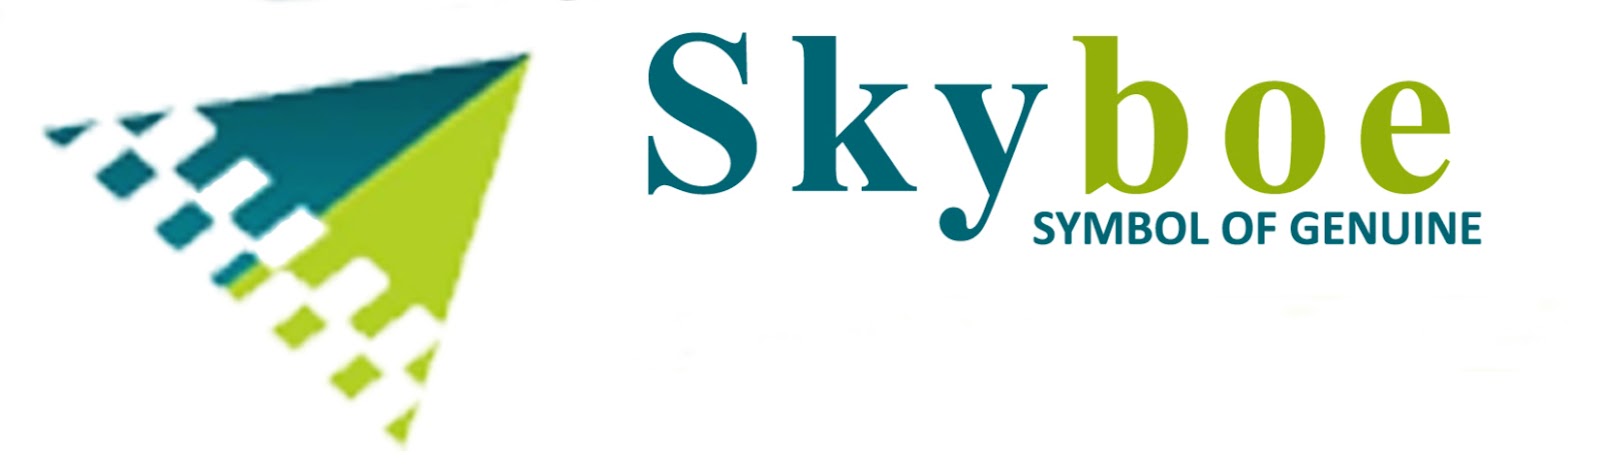 Skyboe